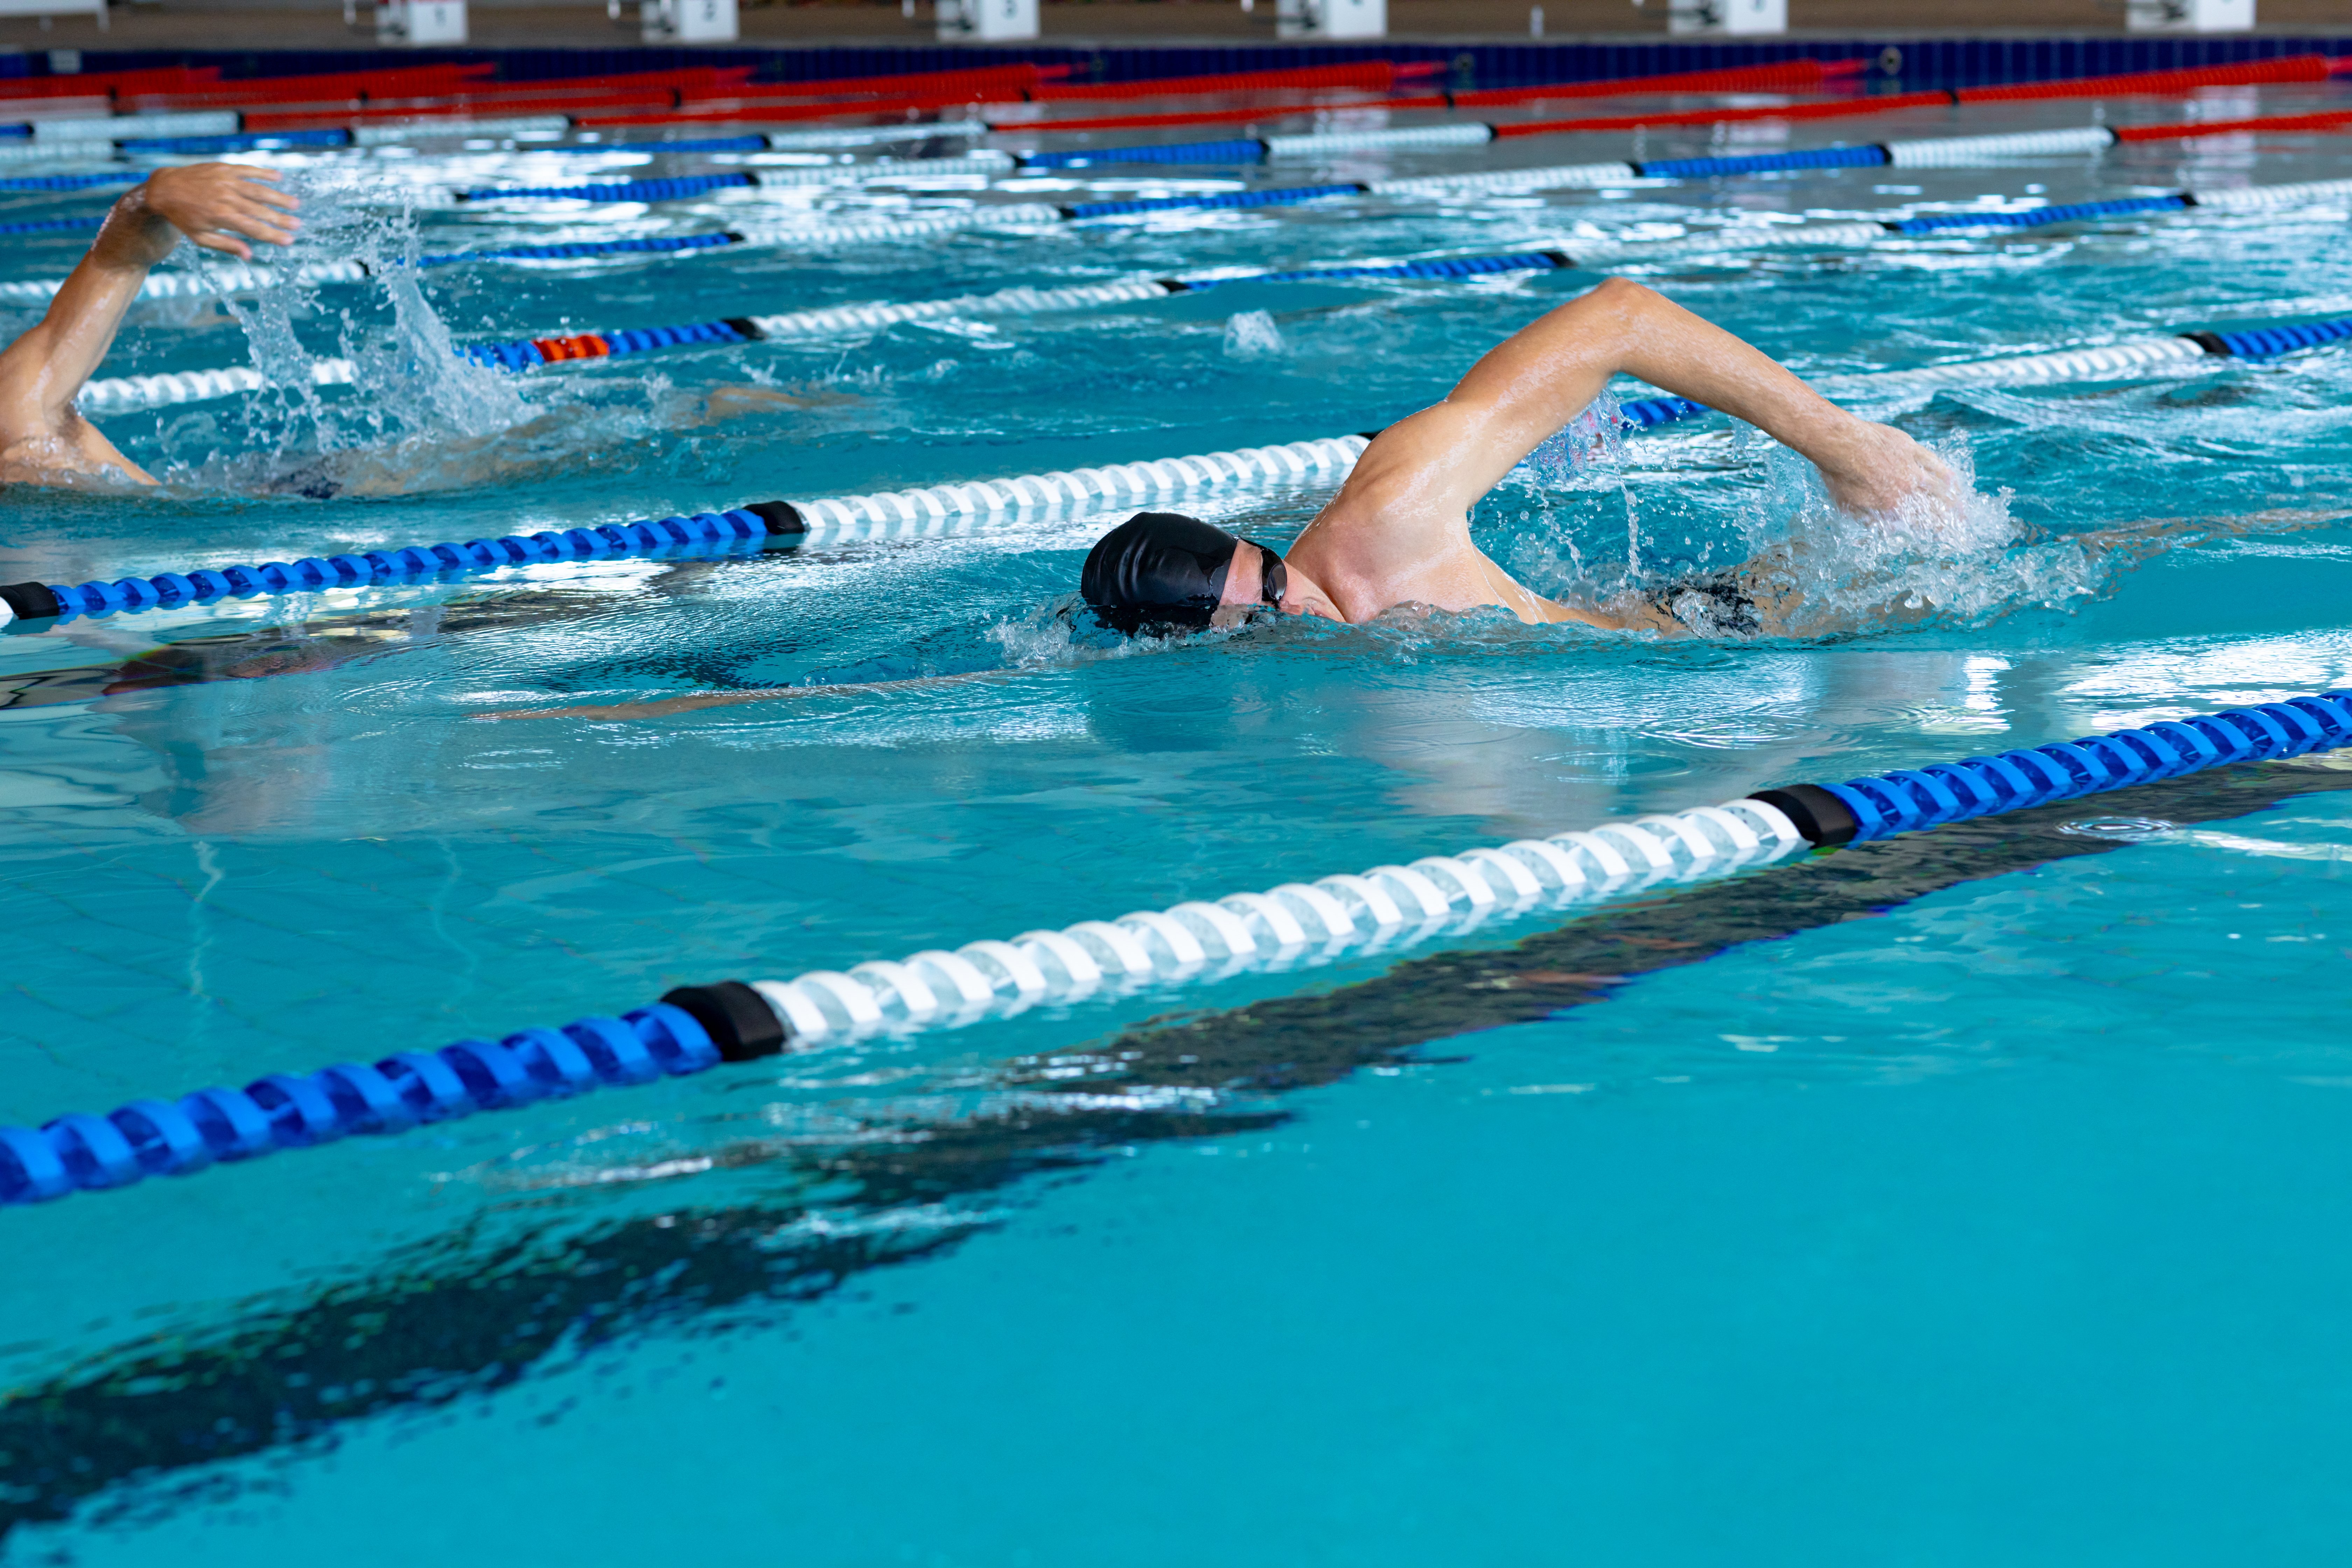 swimmers-swimming-in-the-pool-2021-04-04-18-00-39-utc